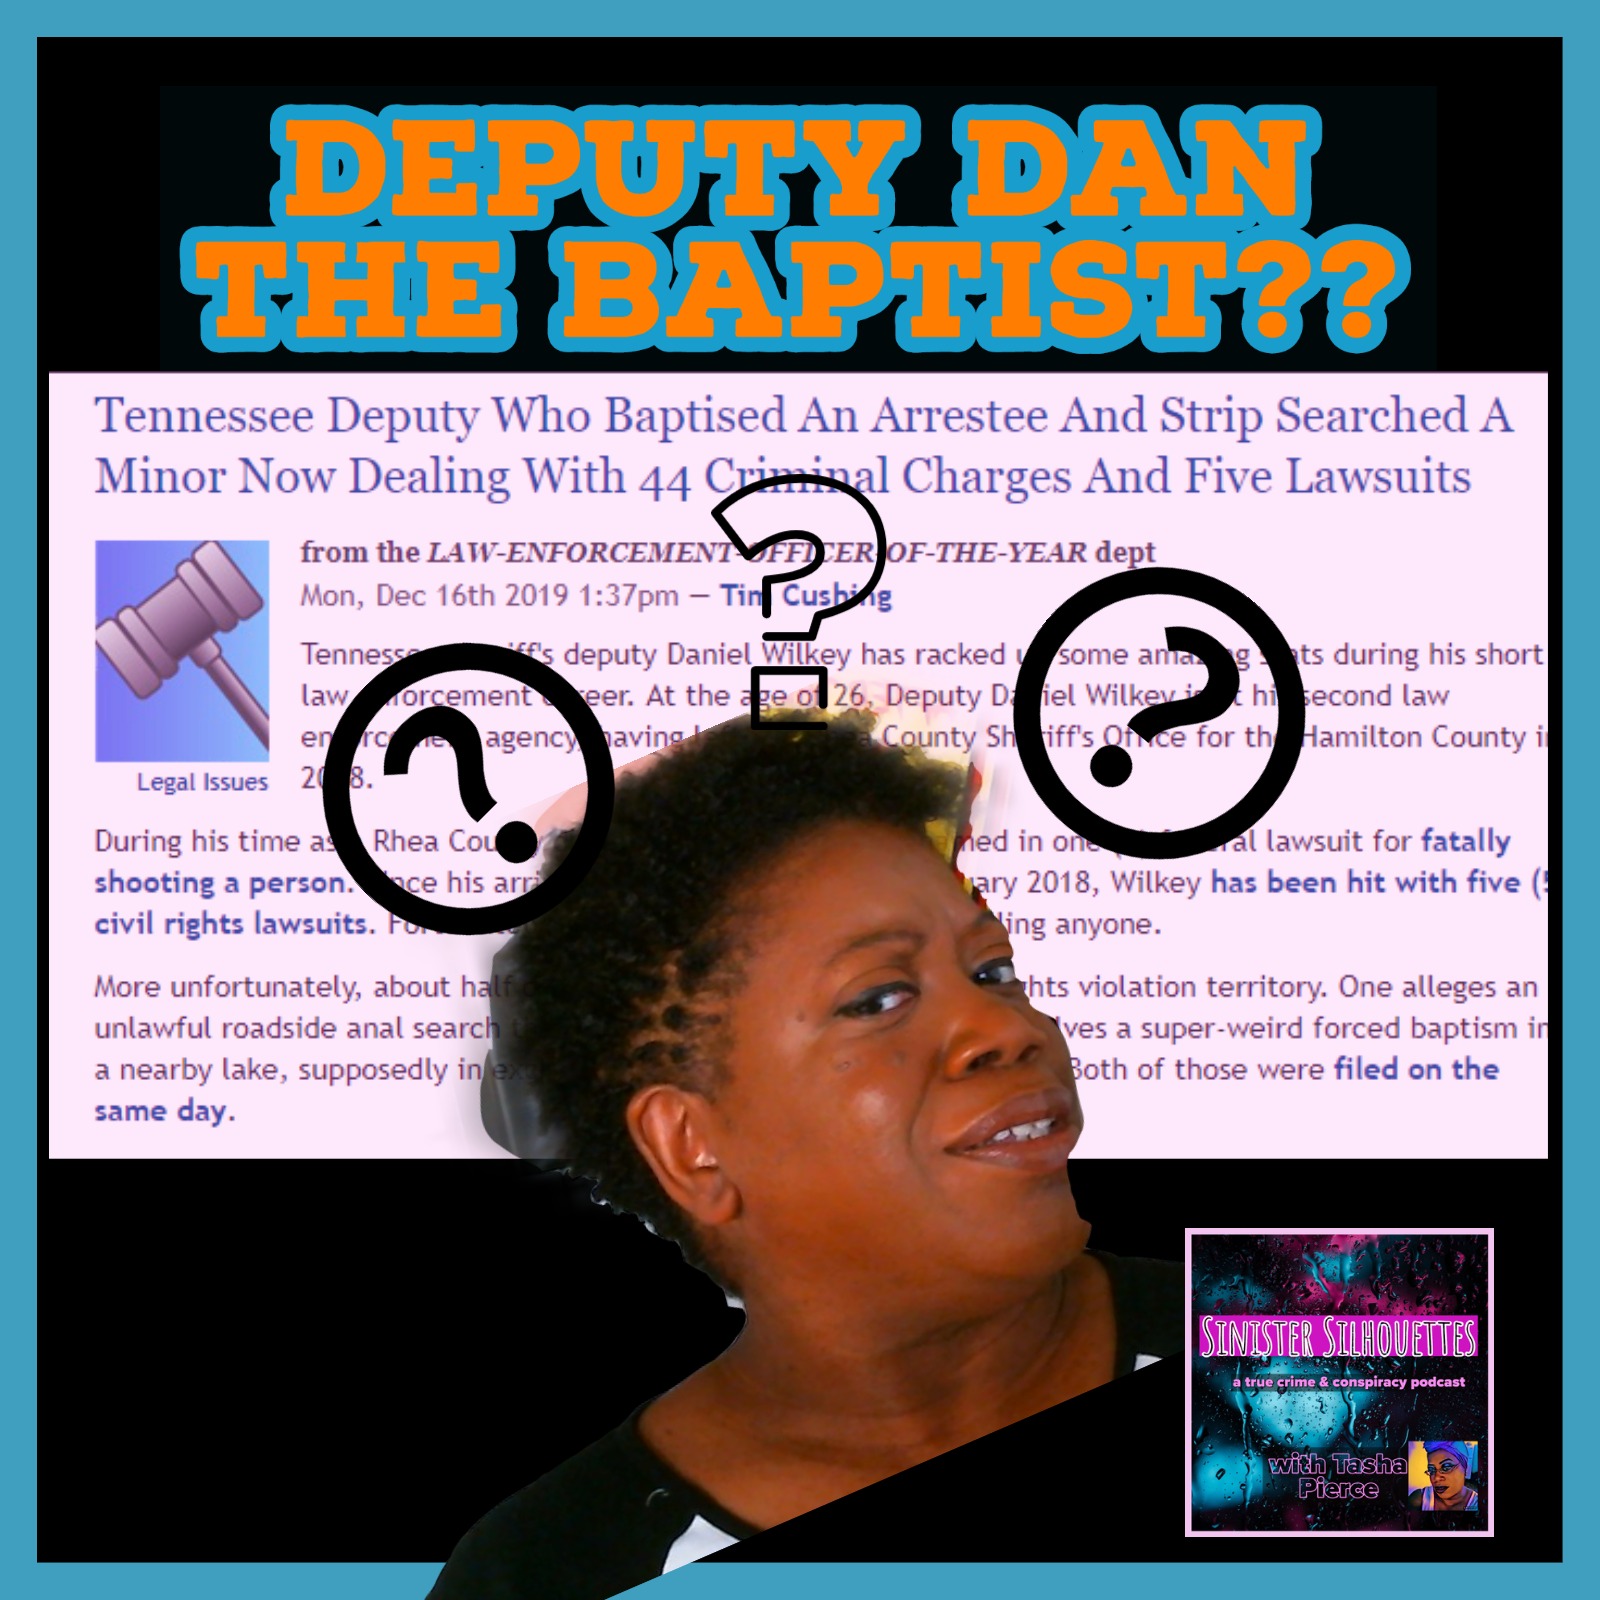 Deputy Dan the Baptist?